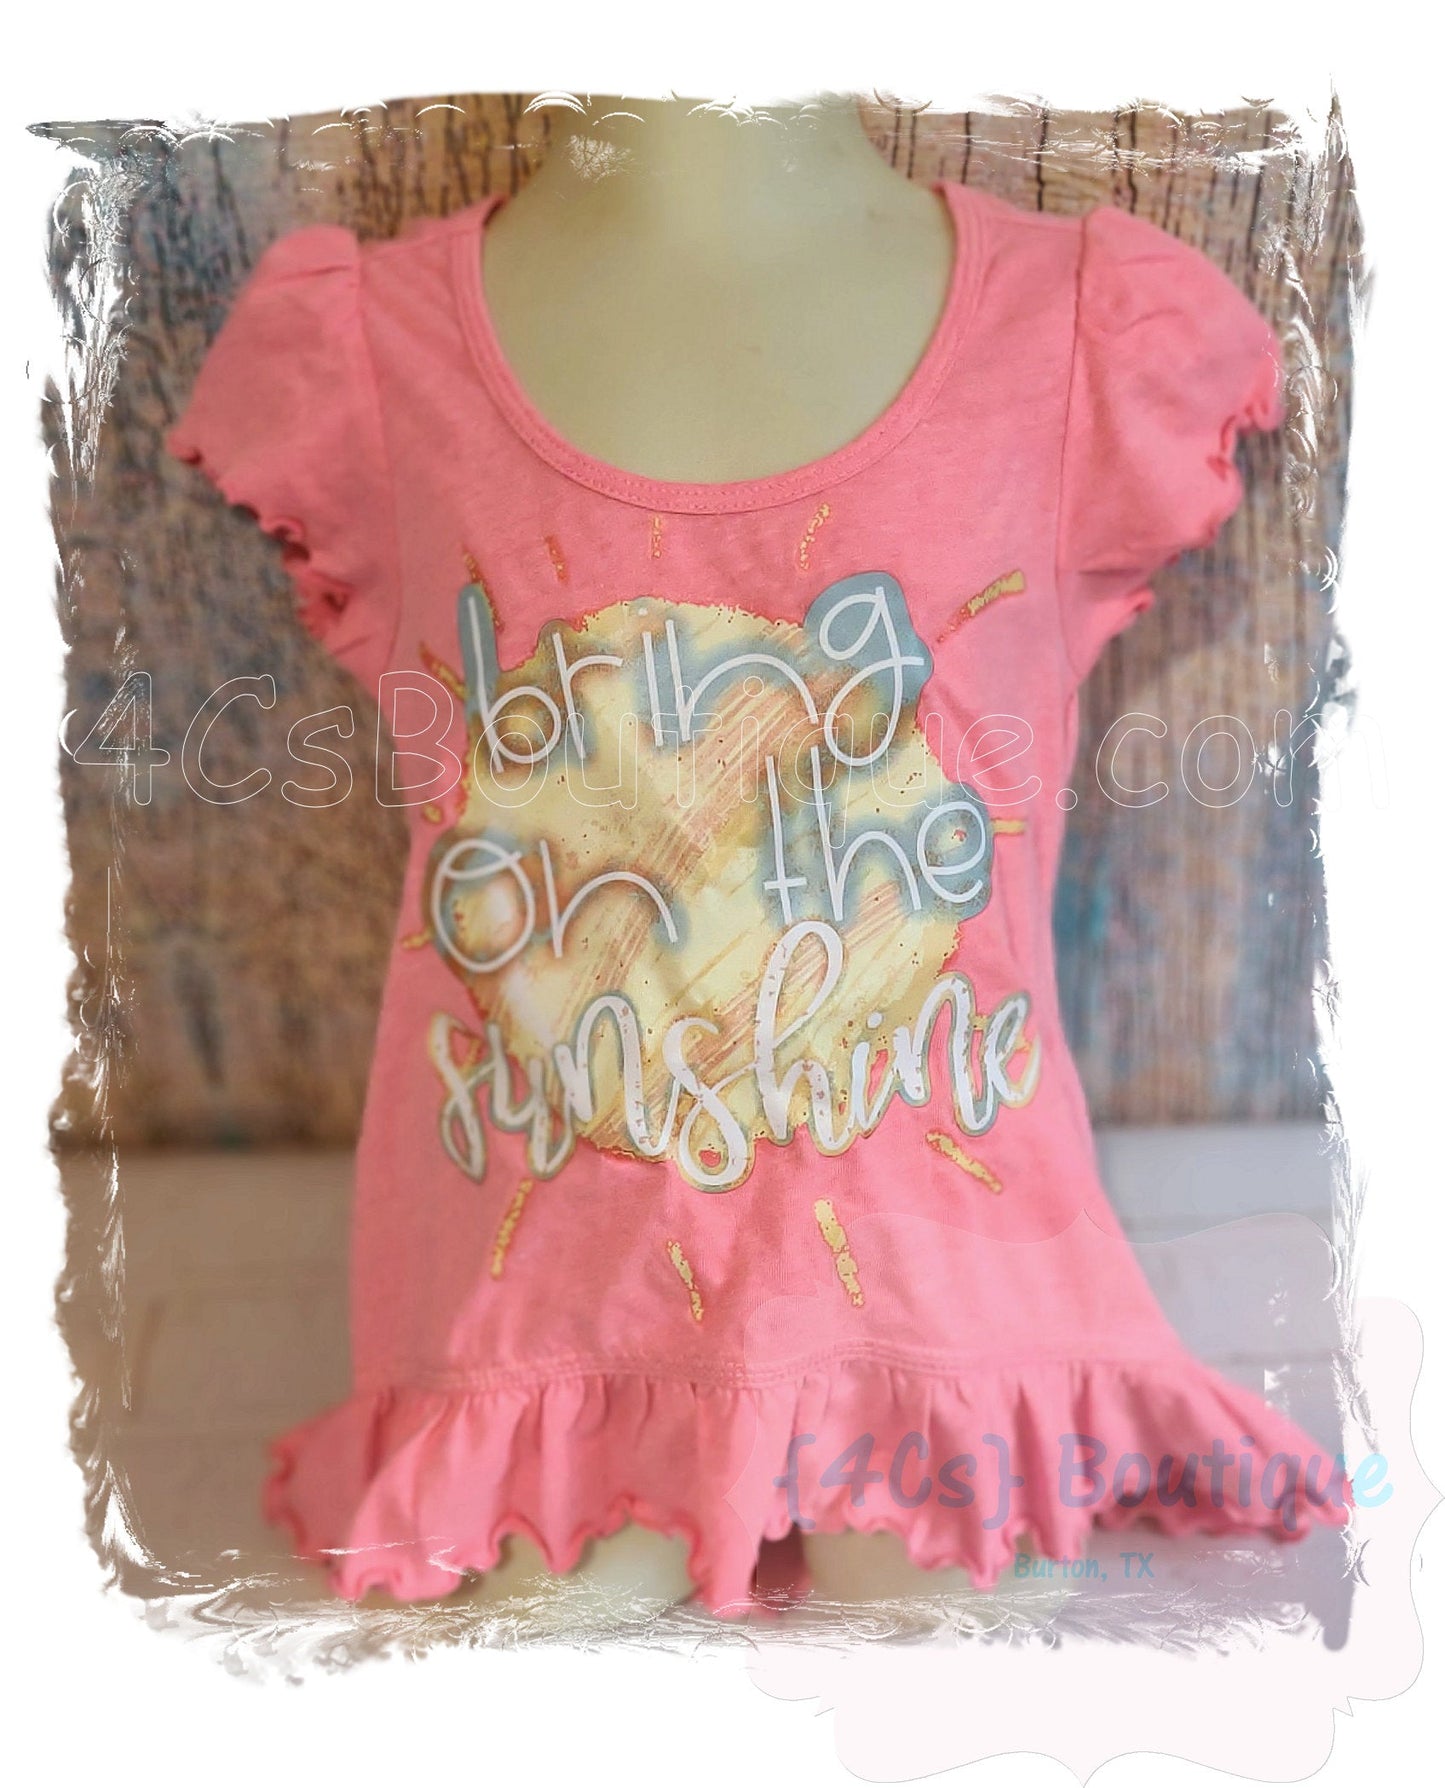 Size 4 Bring On The Sunshine Pink Shirt